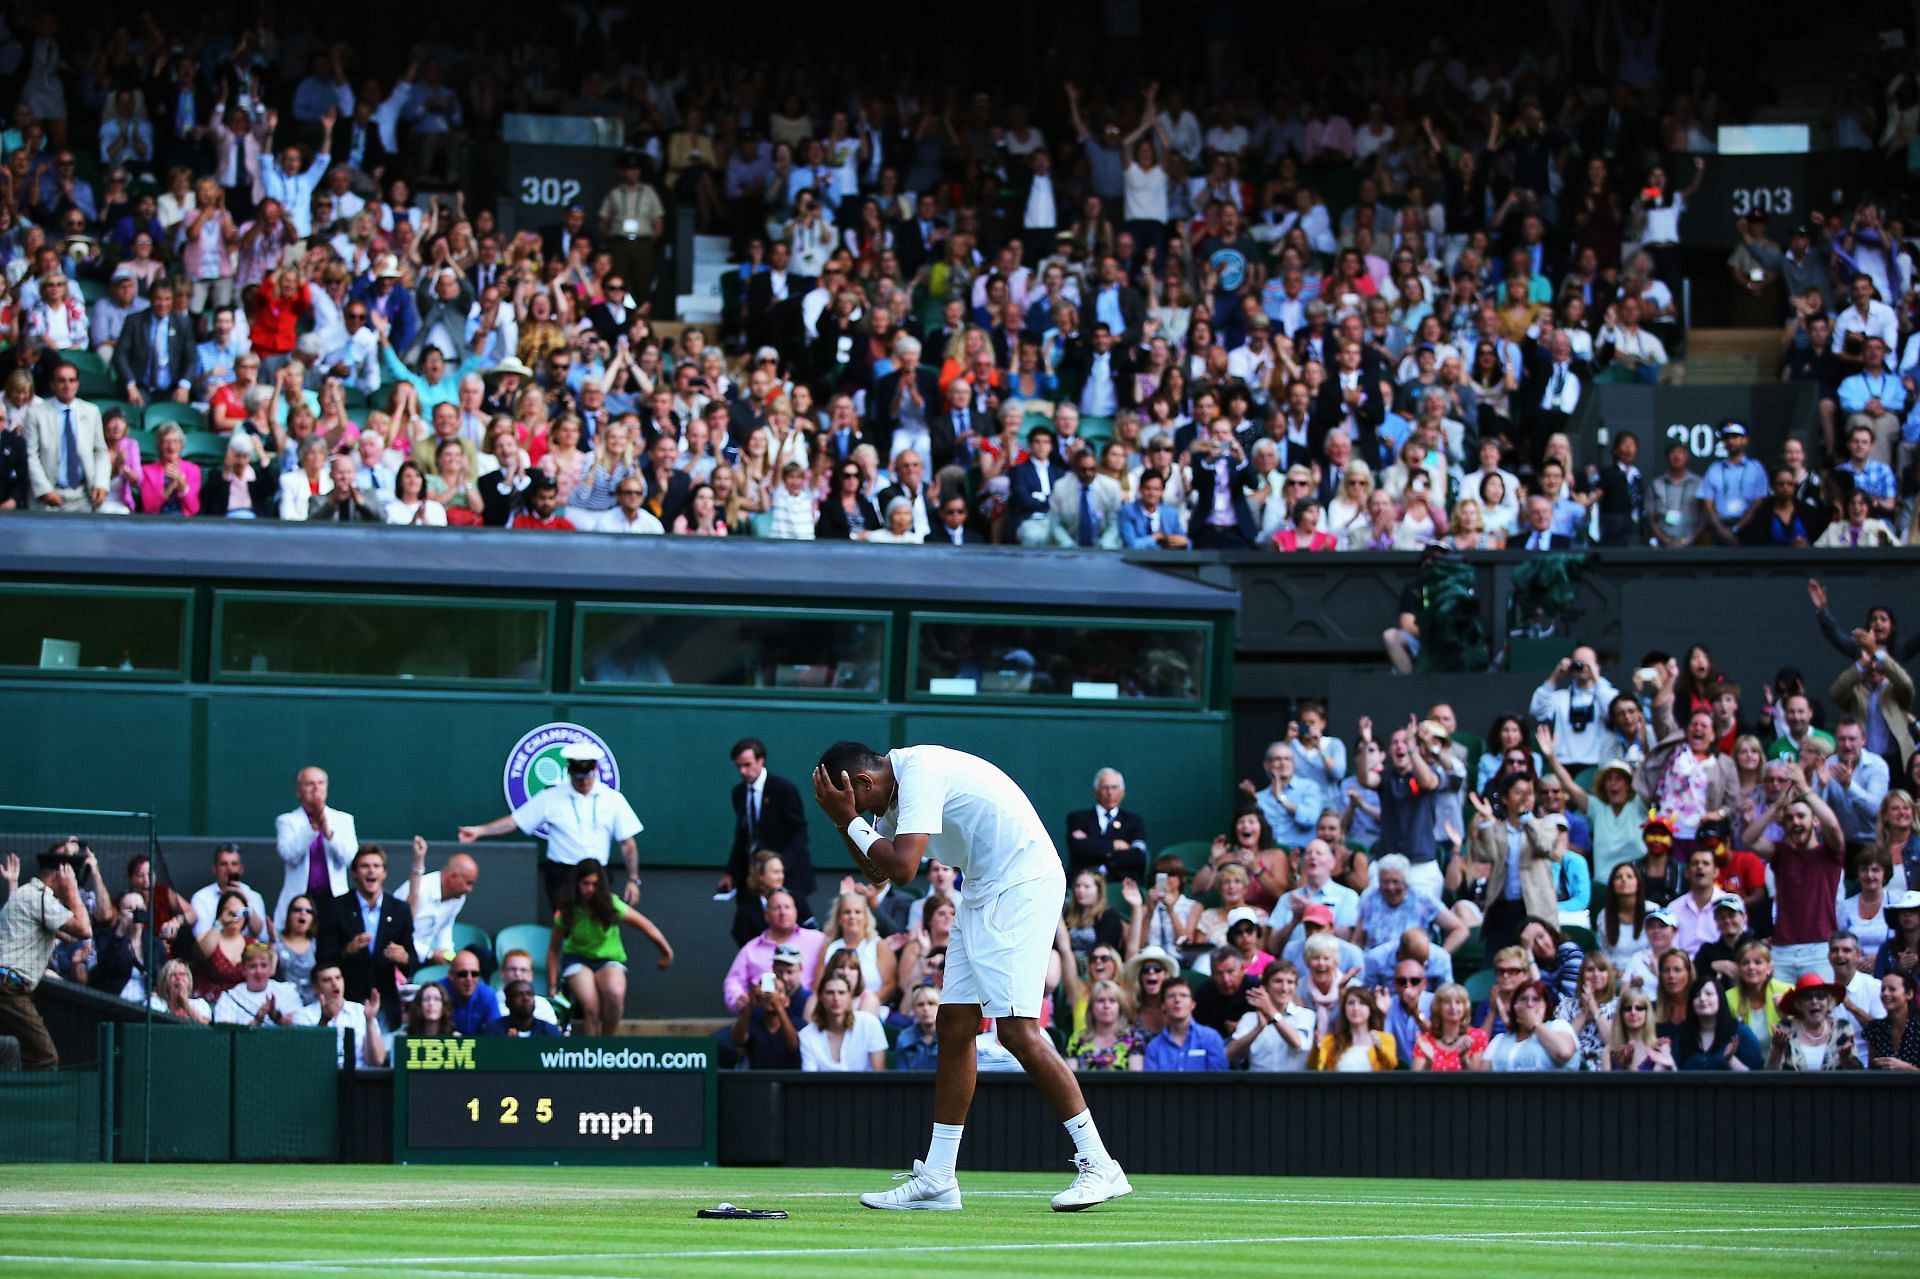 Nick Kyrgios celebrates his win against Rafael Nadal at Wimbledon 2014